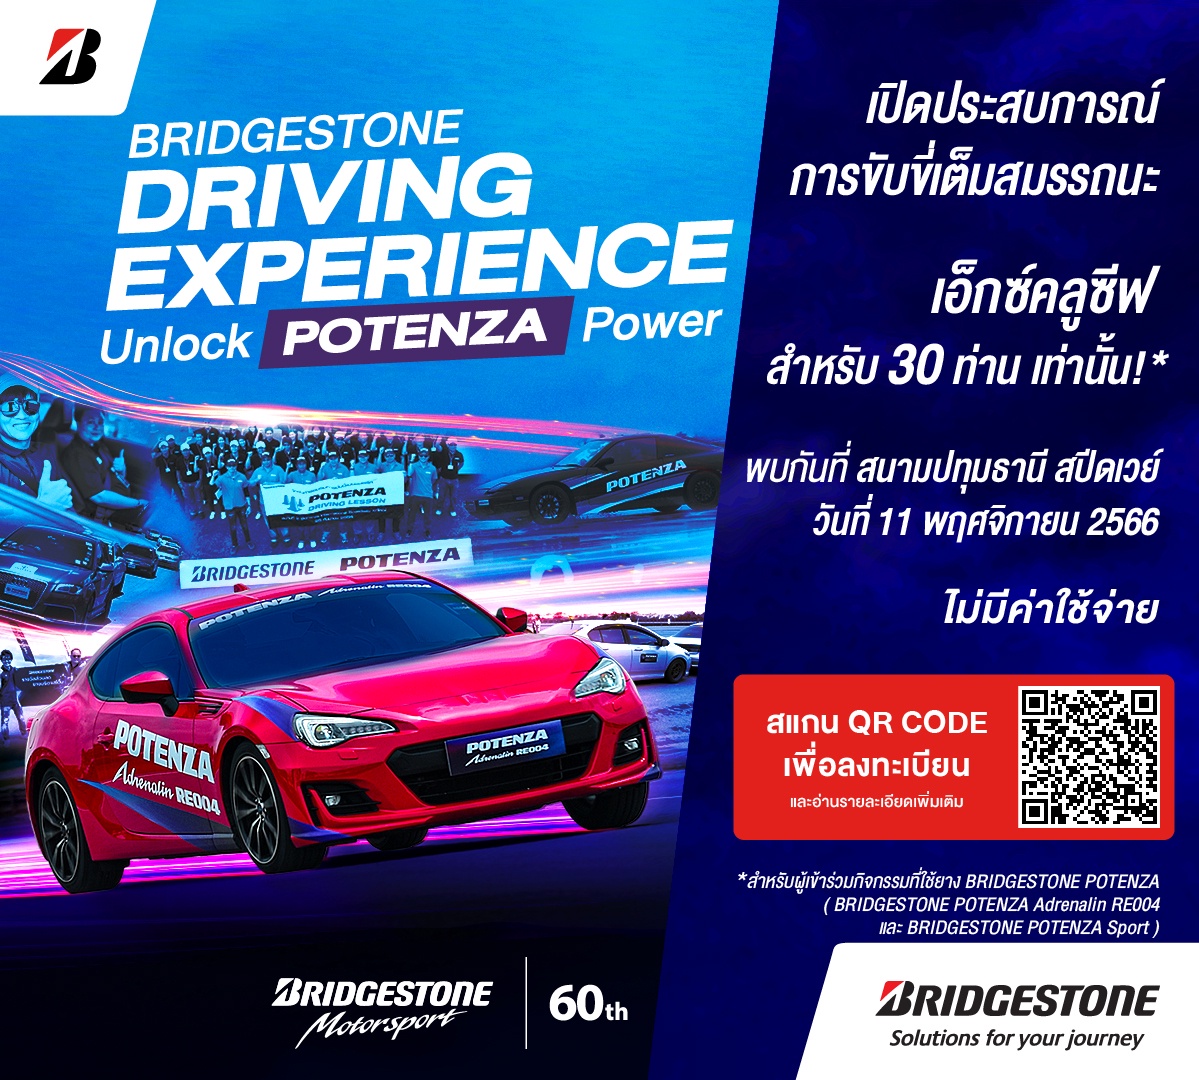 Bridgestone Invites Sports Car Enthusiasts to Unlock Driving Performance in BRIDGESTONE DRIVING EXPERIENCE: Unlock POTENZA Power